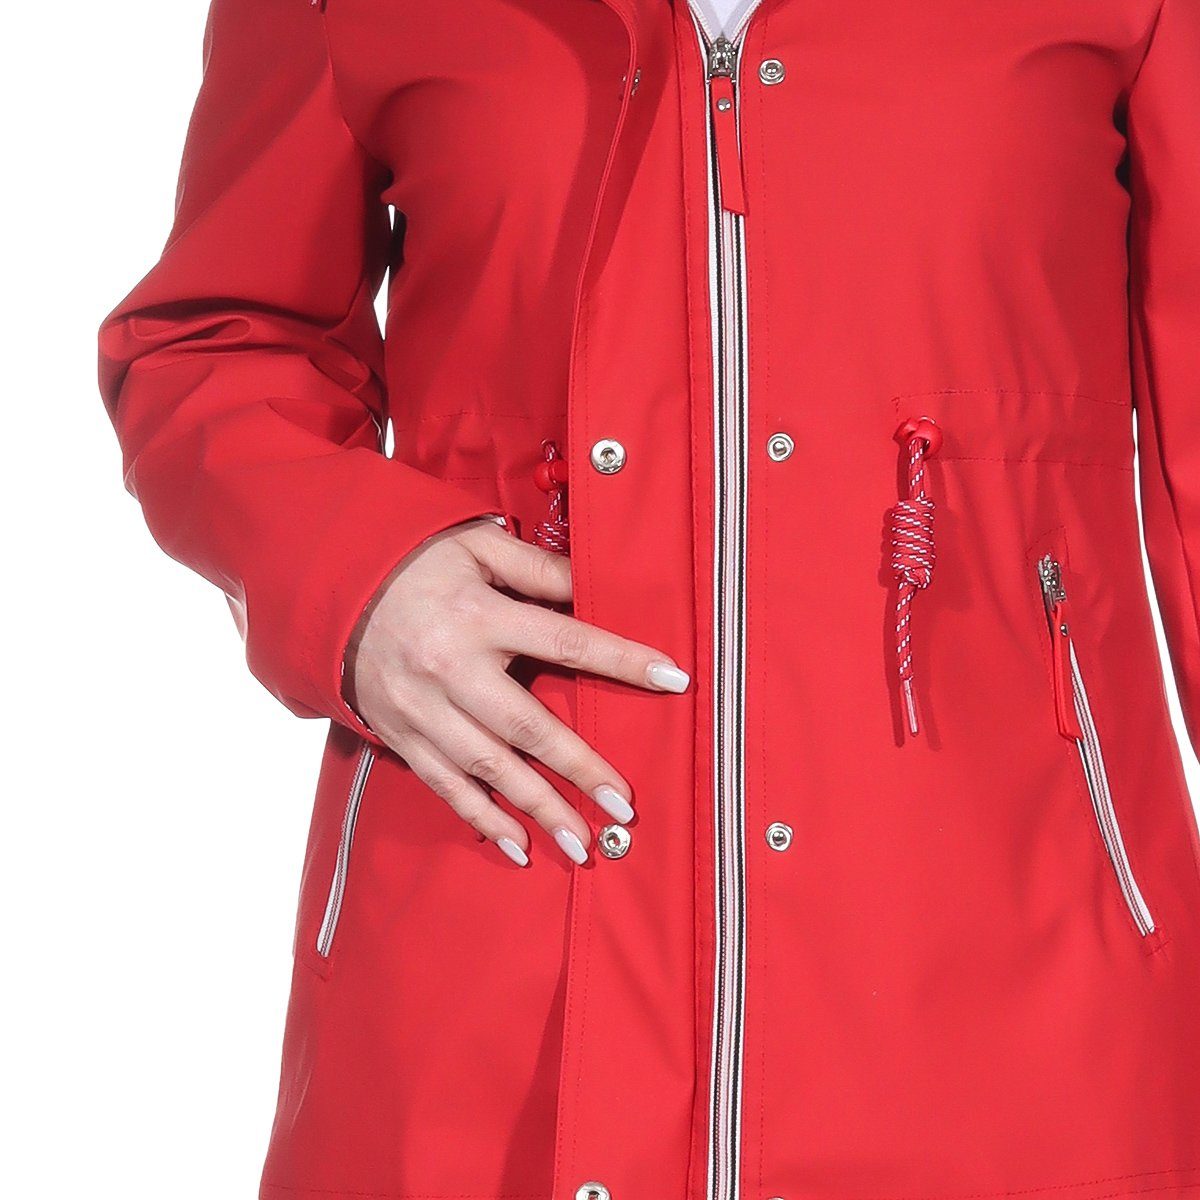 (1-St) Damen Aurela großen Regenjacke erhältlich, abnehmbarer gummierte in Damenmode Kapuze, Regenjacken Allwetterjacken Größen Outdoorjacken mit Rot auch Regenjacke